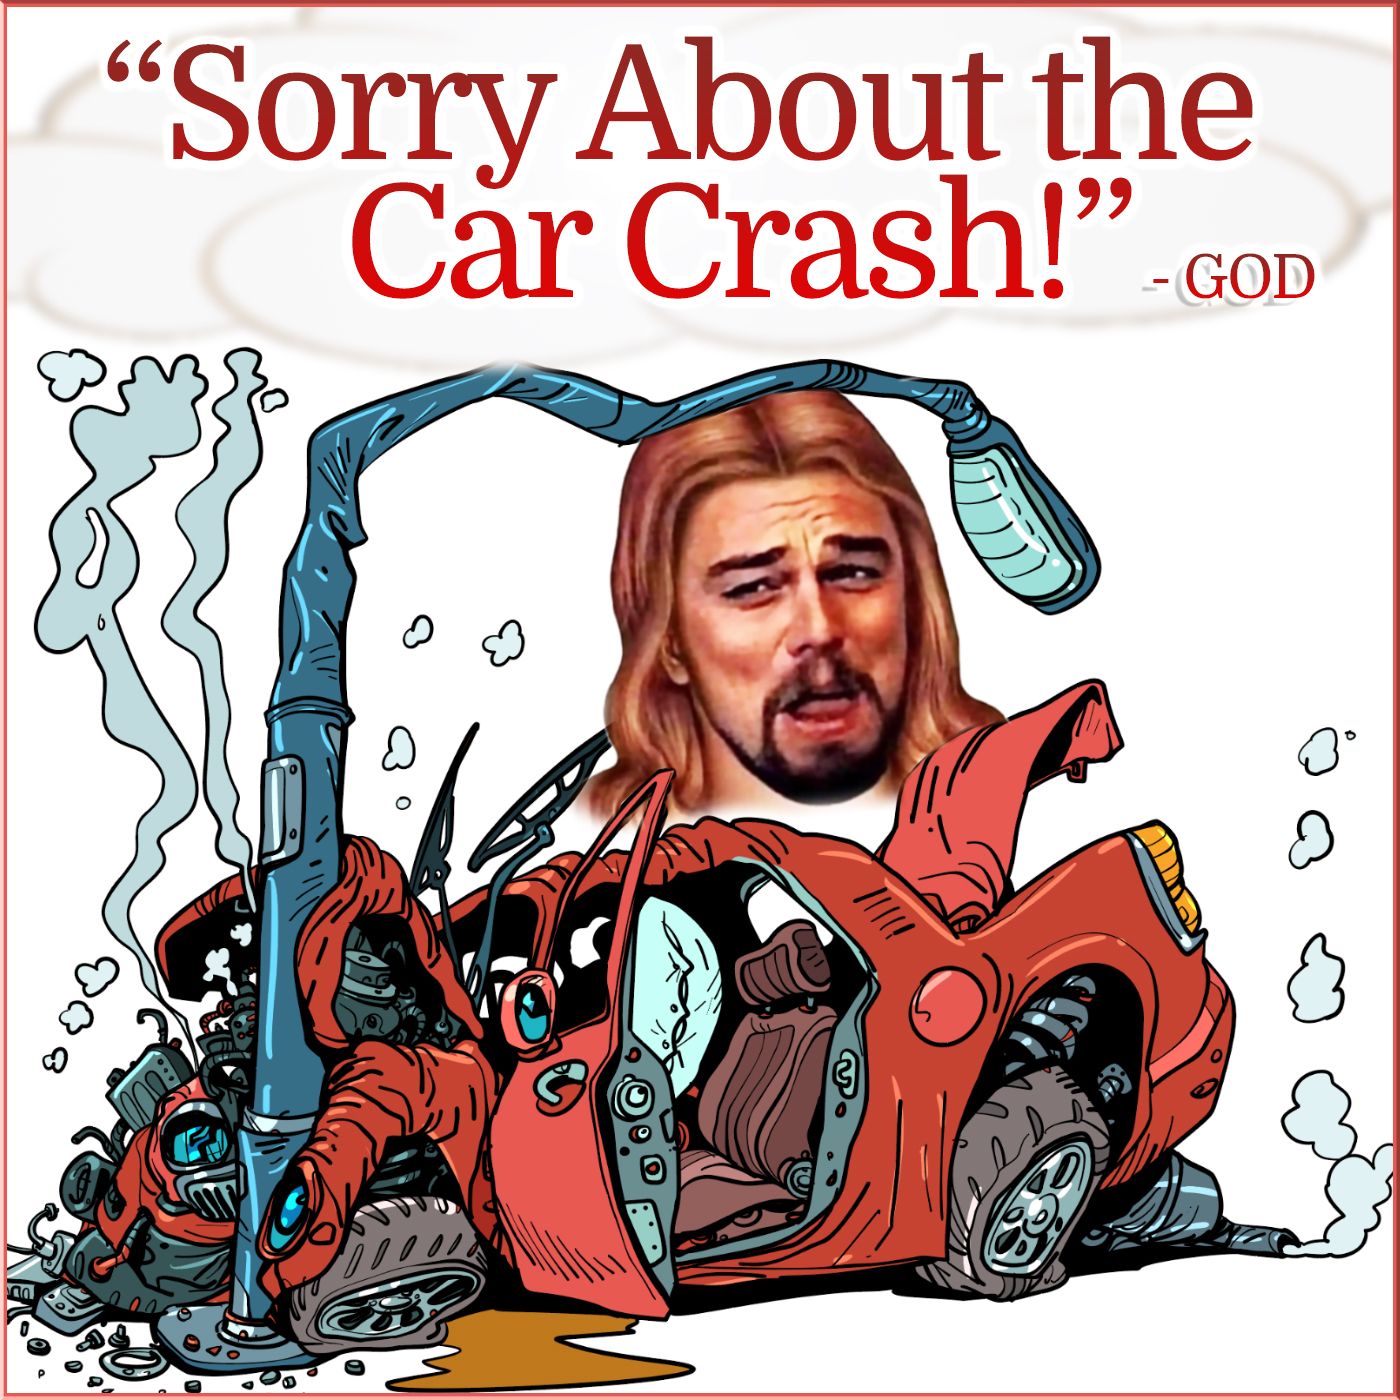 ”Sorry About the Car Crash!” - GOD